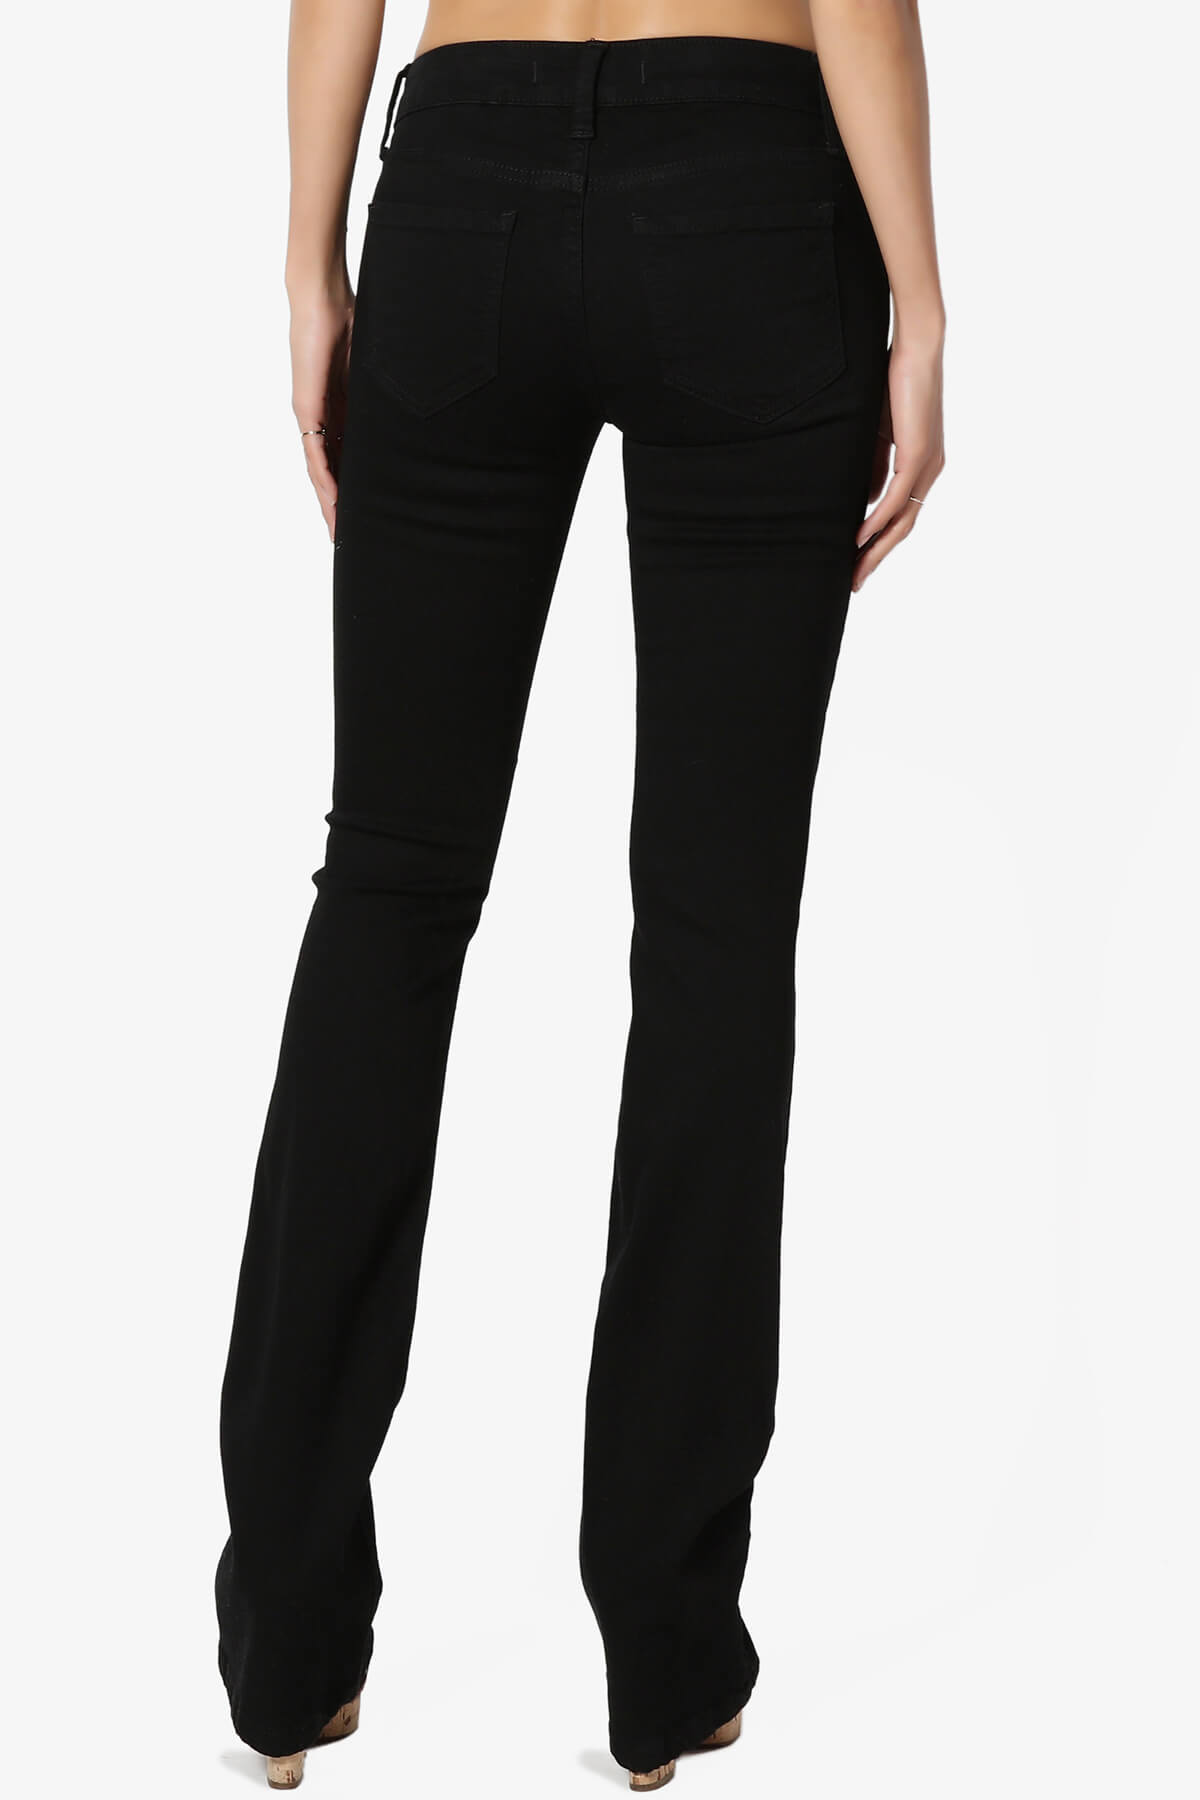 TheMogan Women's Soft & Stretch Black Denim Mid Rise Slimming Bootcut Jeans 32in inseam